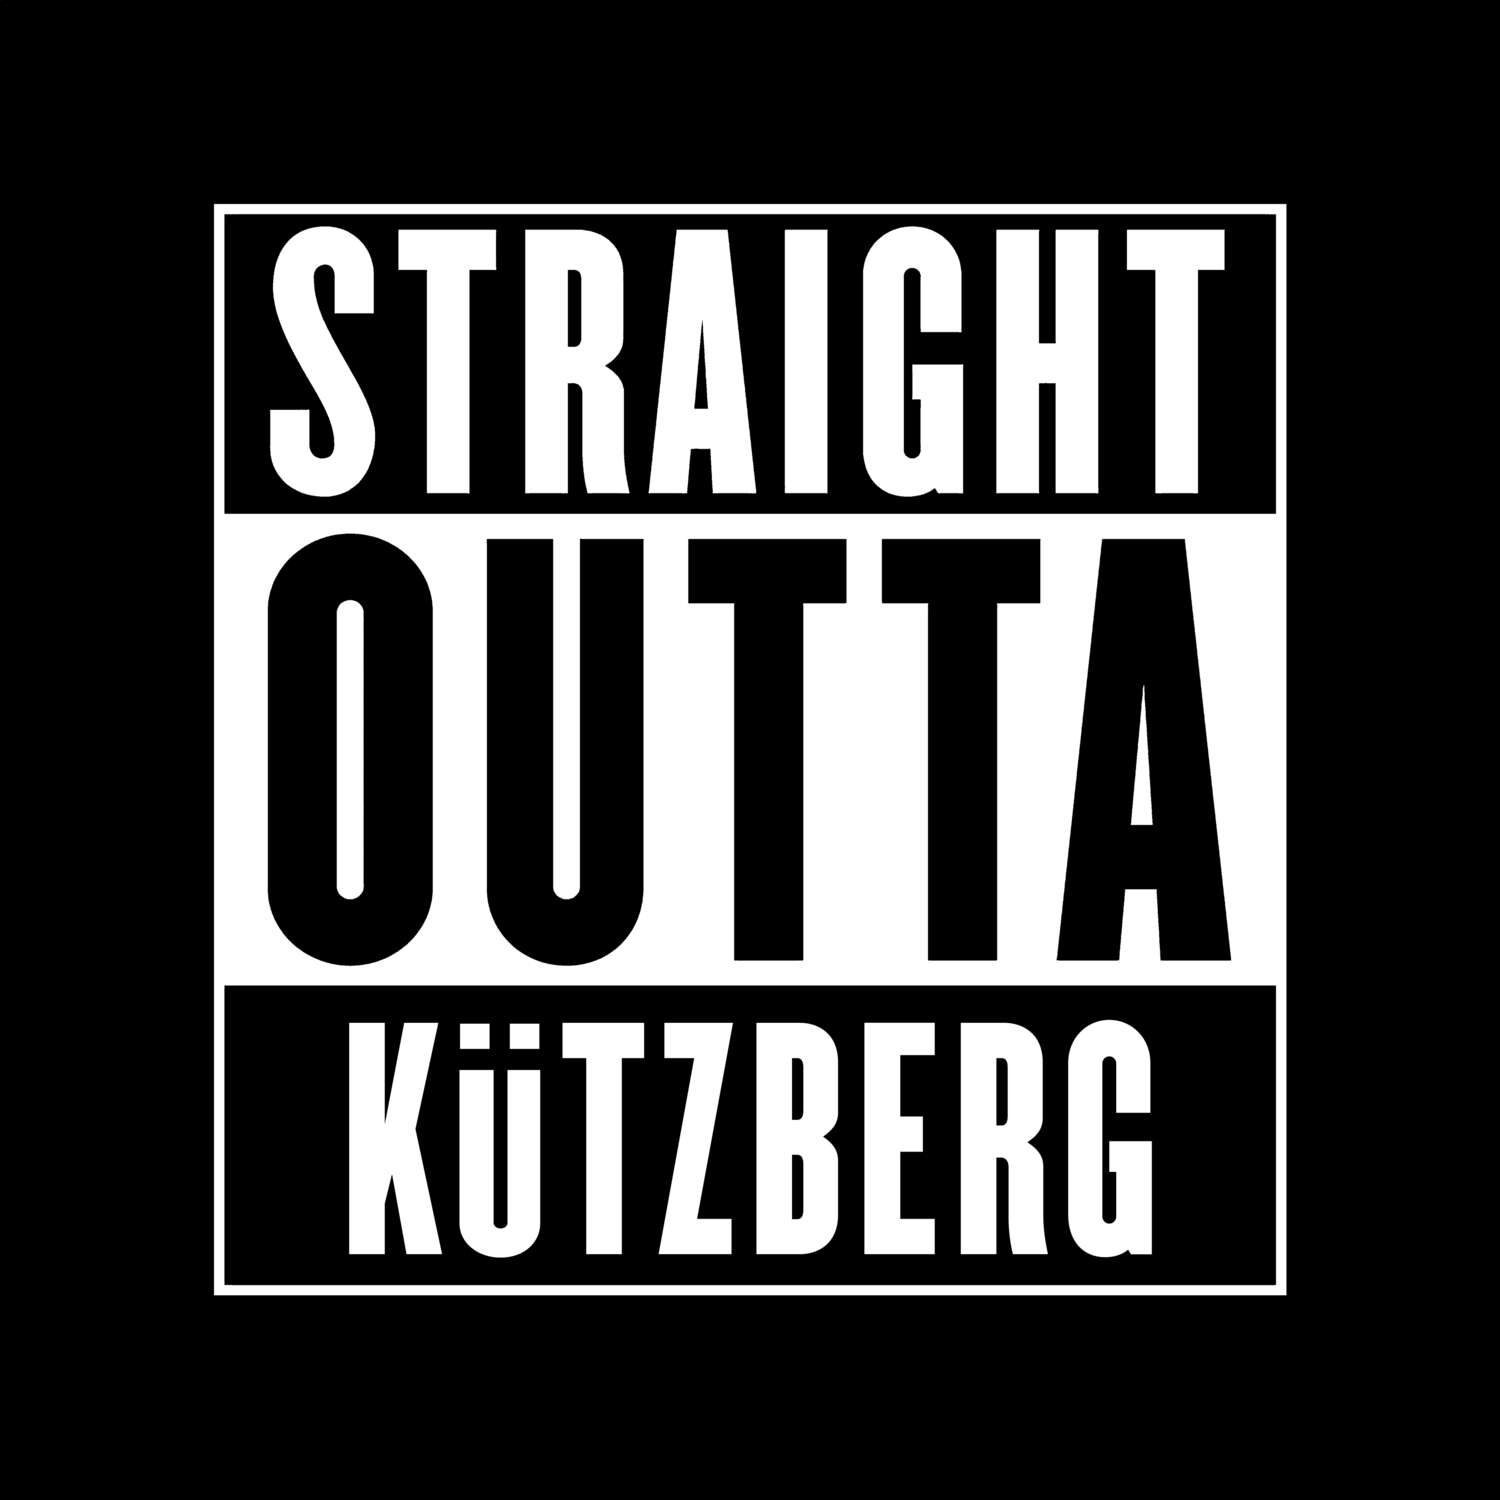 Kützberg T-Shirt »Straight Outta«